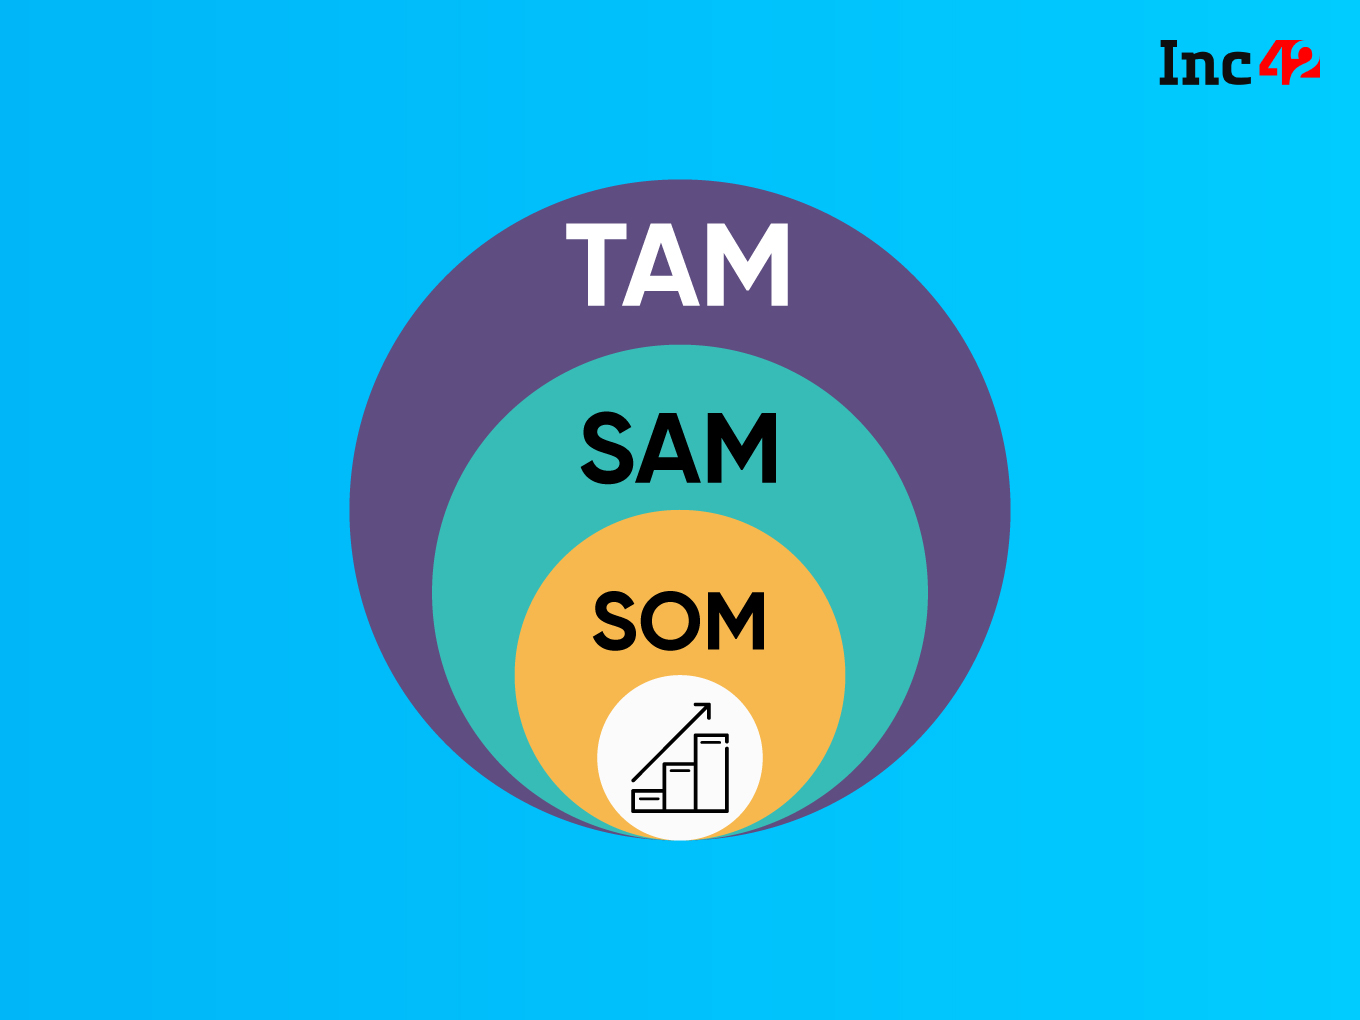 Total Addressable Market (TAM)